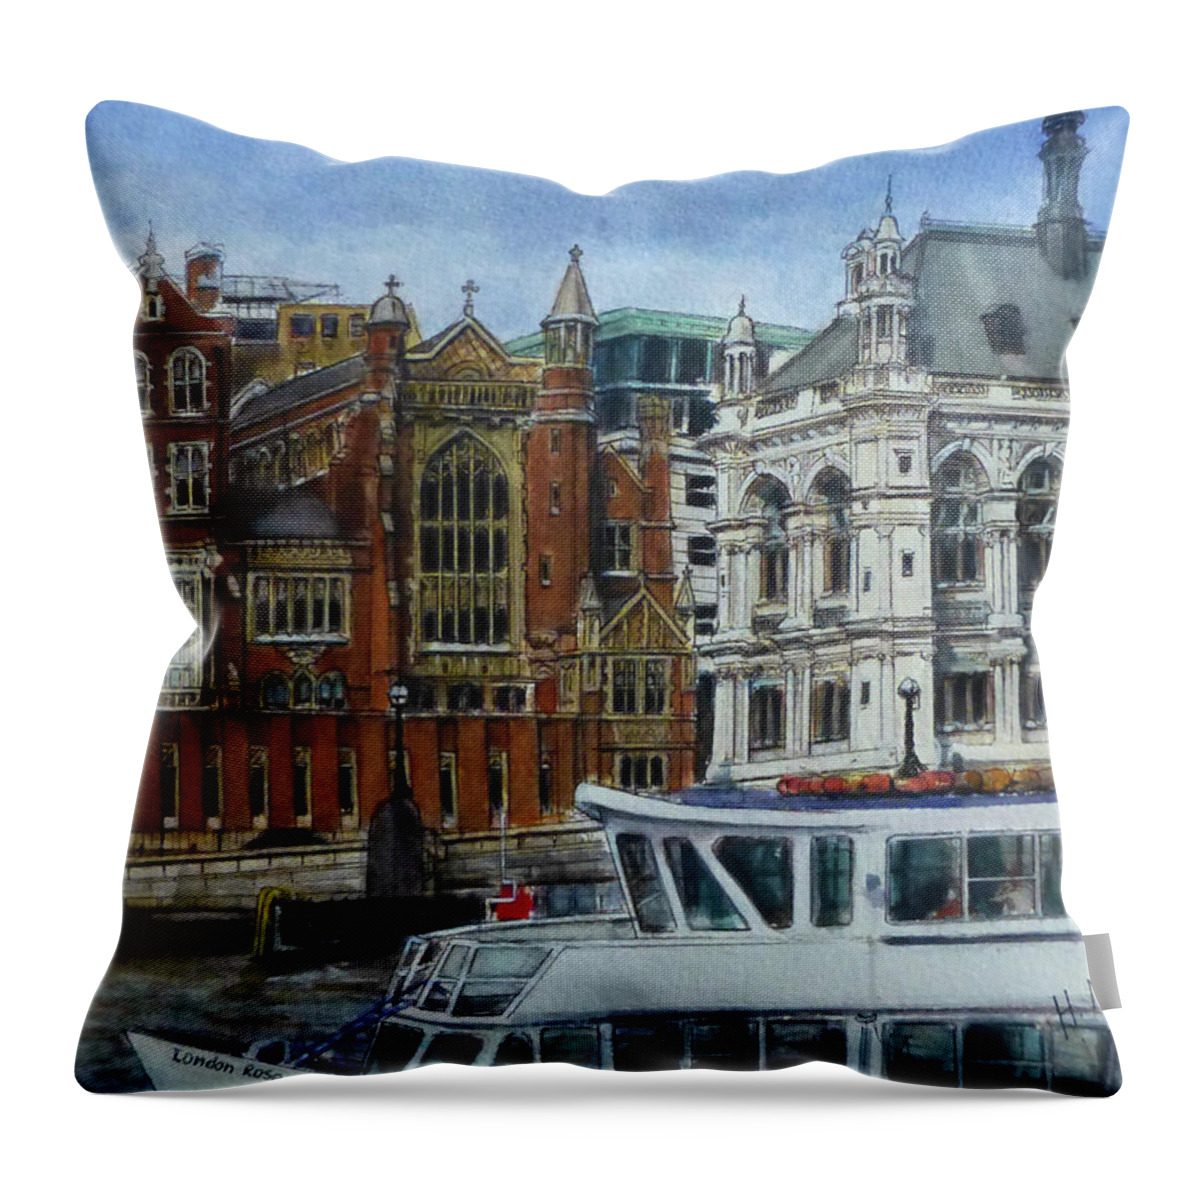 London Throw Pillow featuring the painting London II by Henrieta Maneva